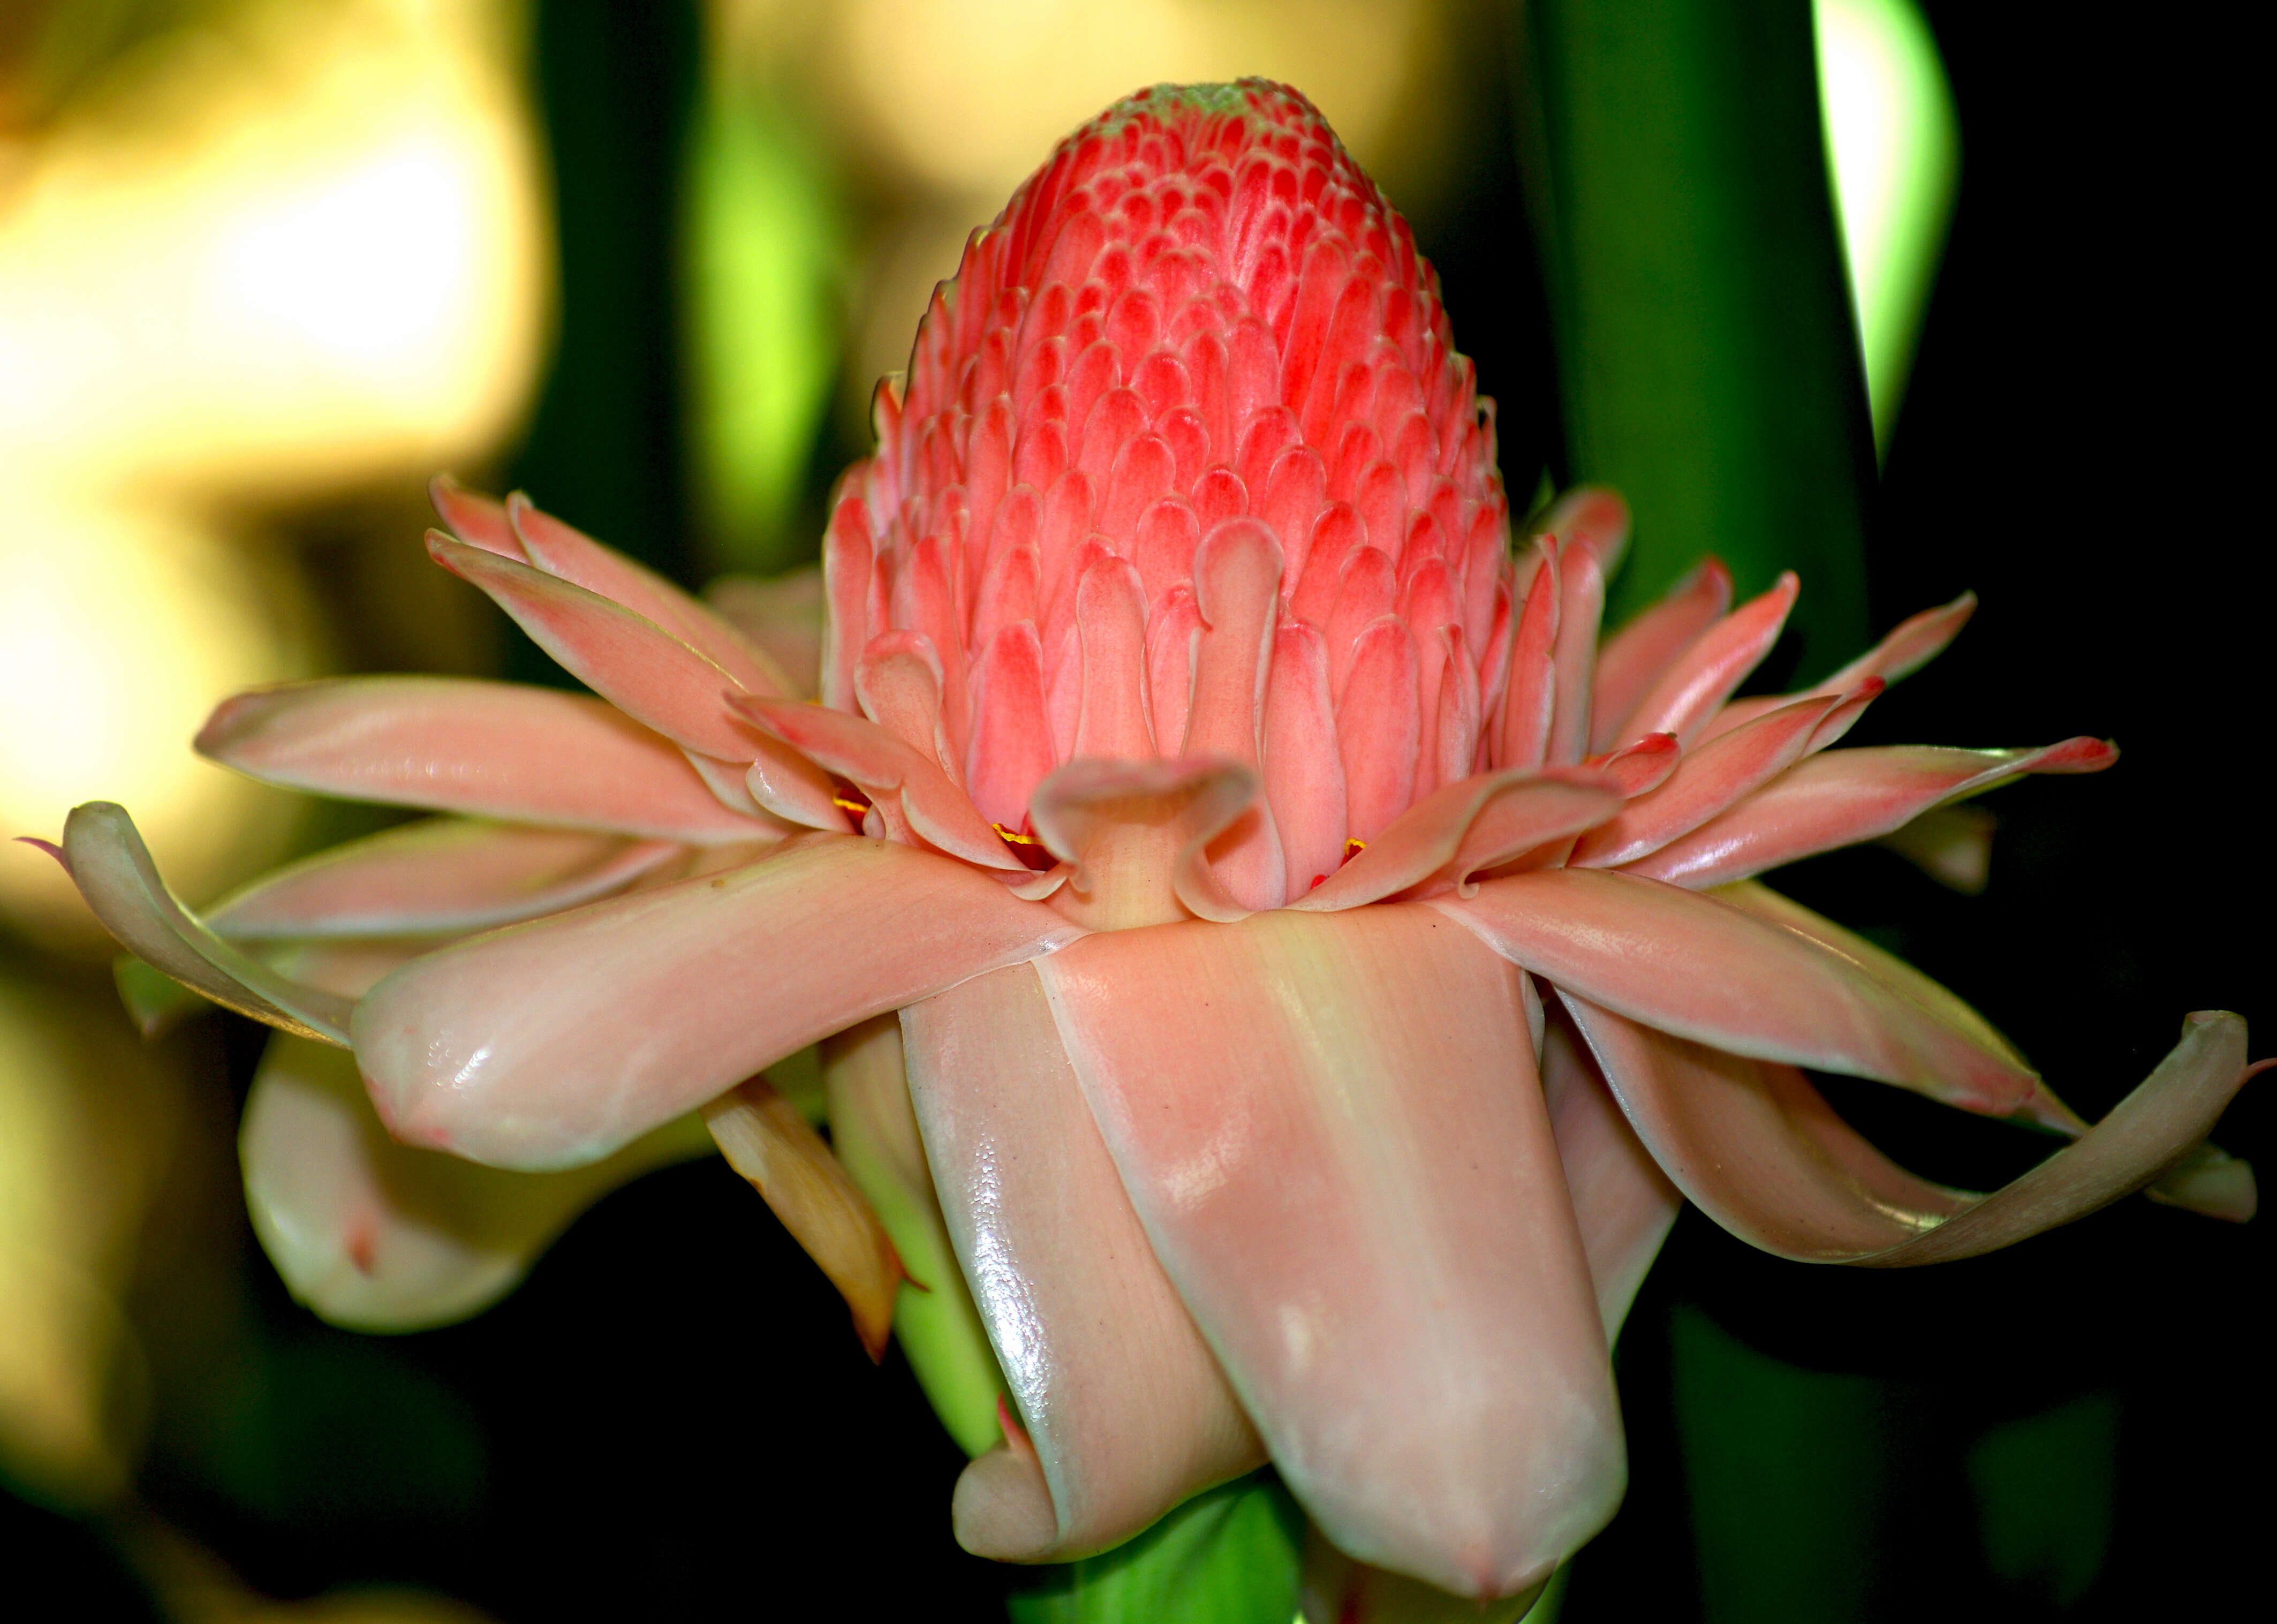 Image of Philippine Waxflower